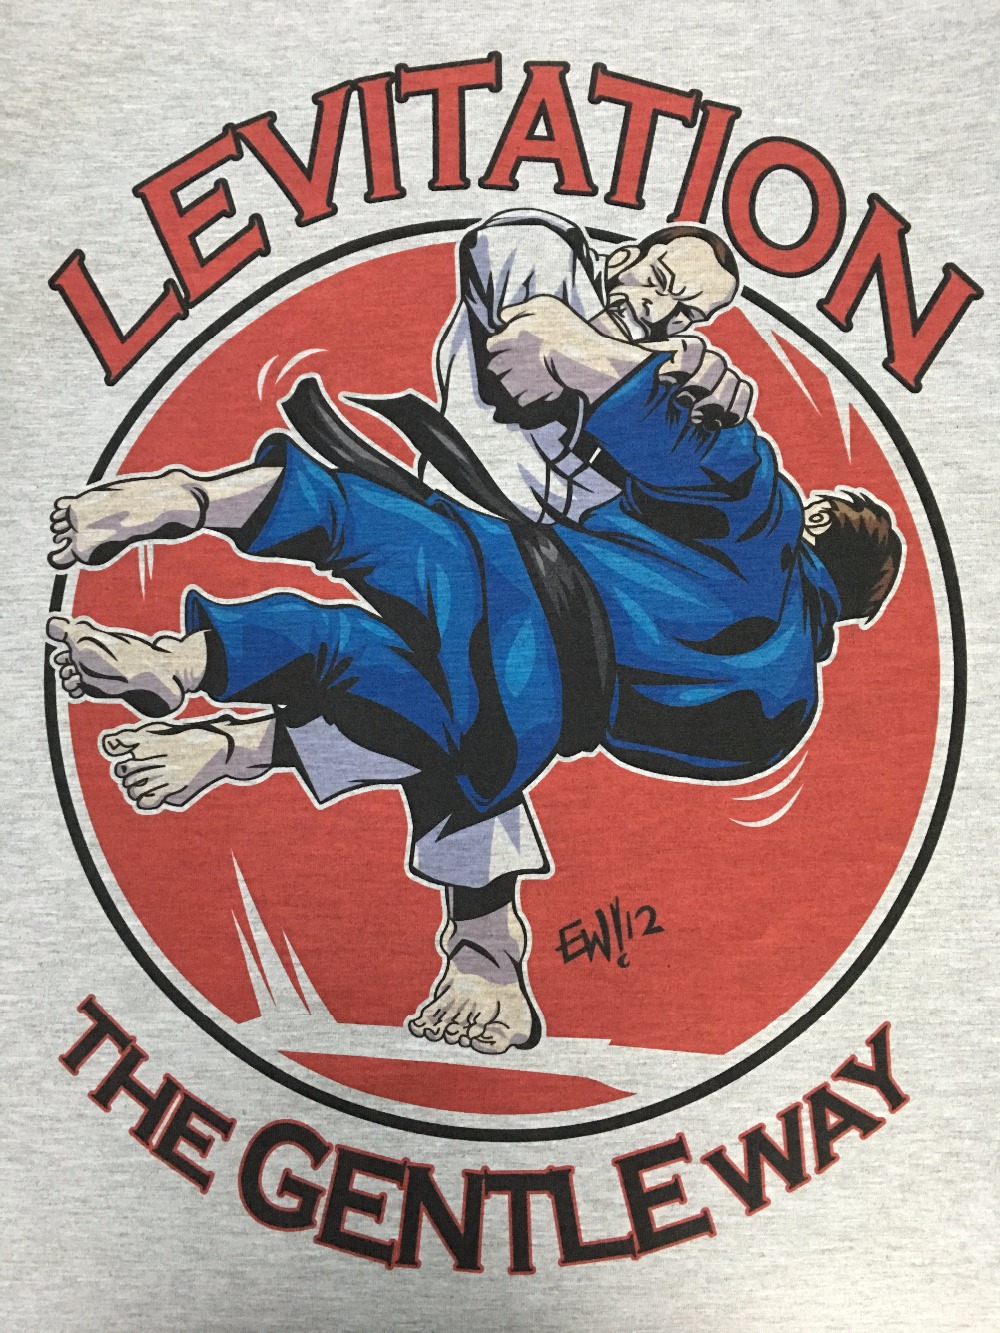 JUDO-JIU-JITSU-MMA-levitation-short-sleeve-T-shirt-Top-Lycra-Cotton-Men-T-shirt-New-DIY-Style-32218199188